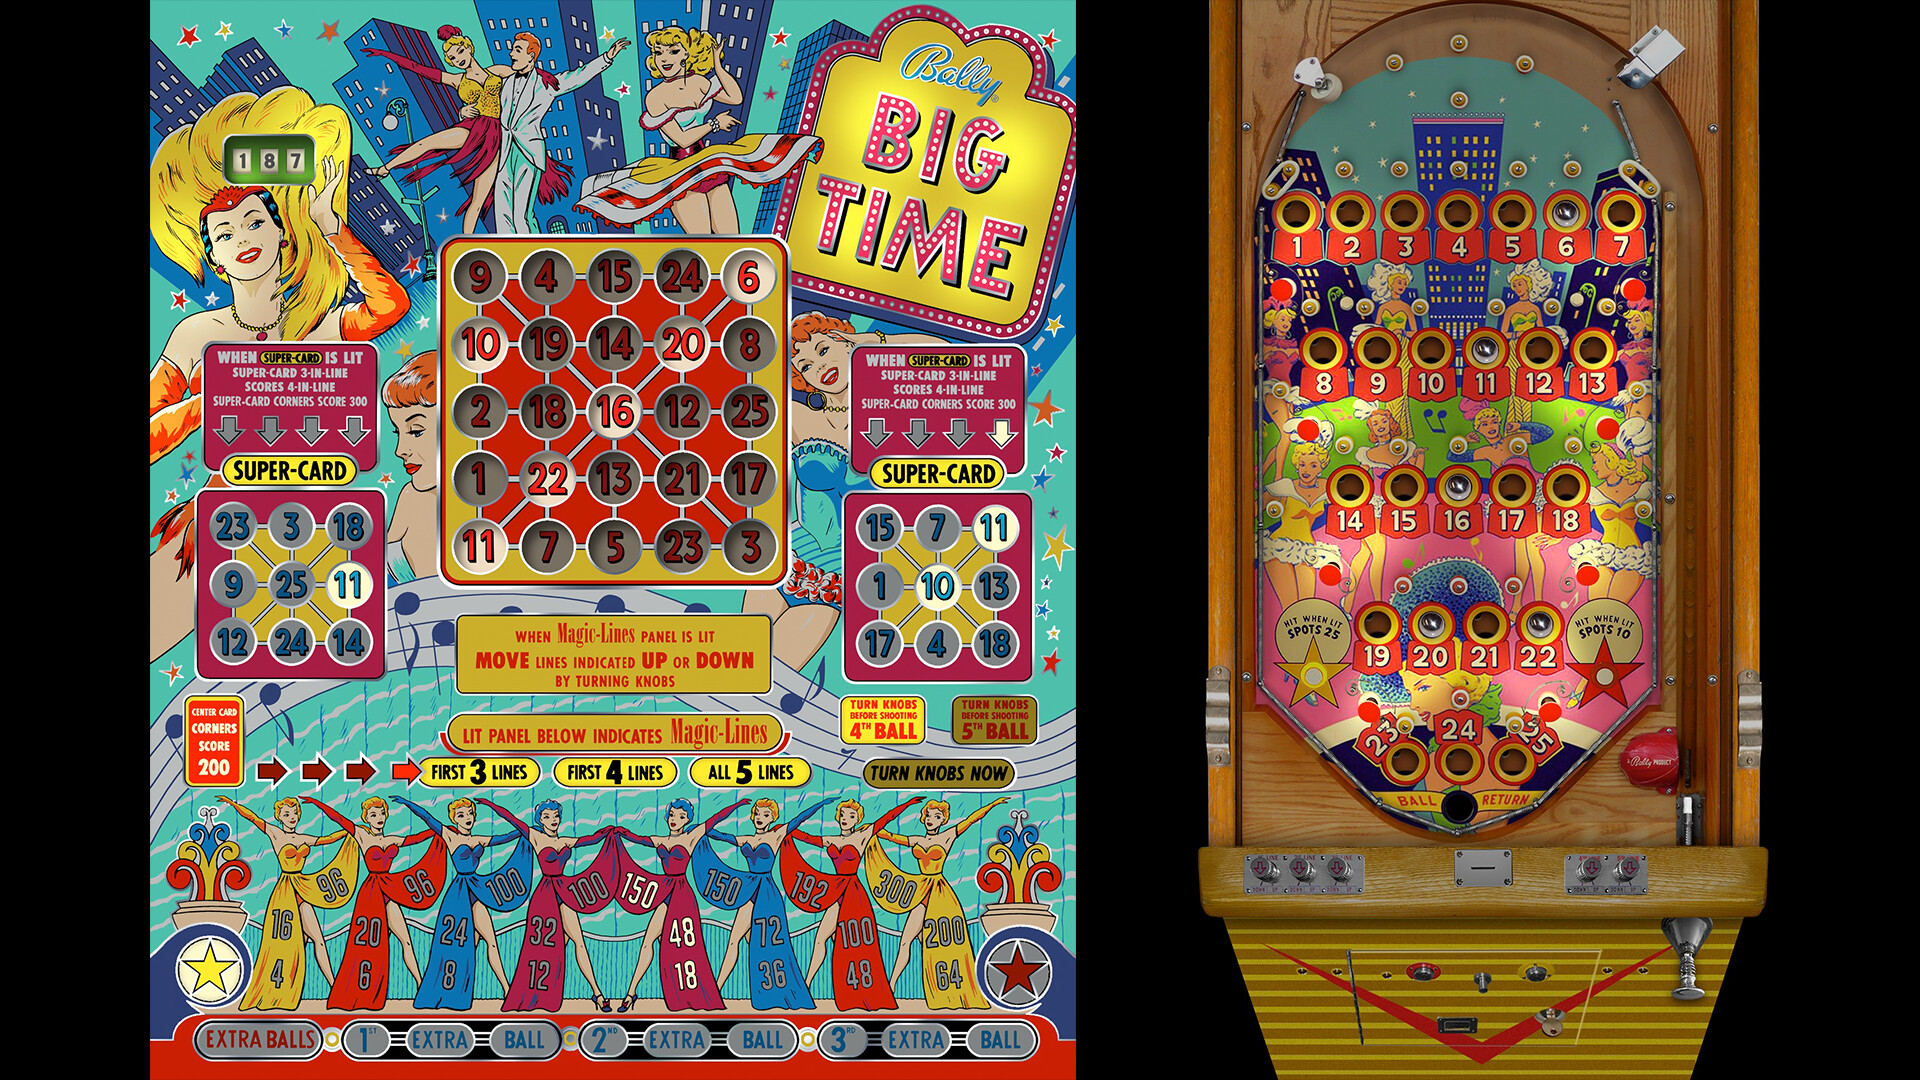 Bingo Pinball Gameroom - Bally Big Time Featured Screenshot #1